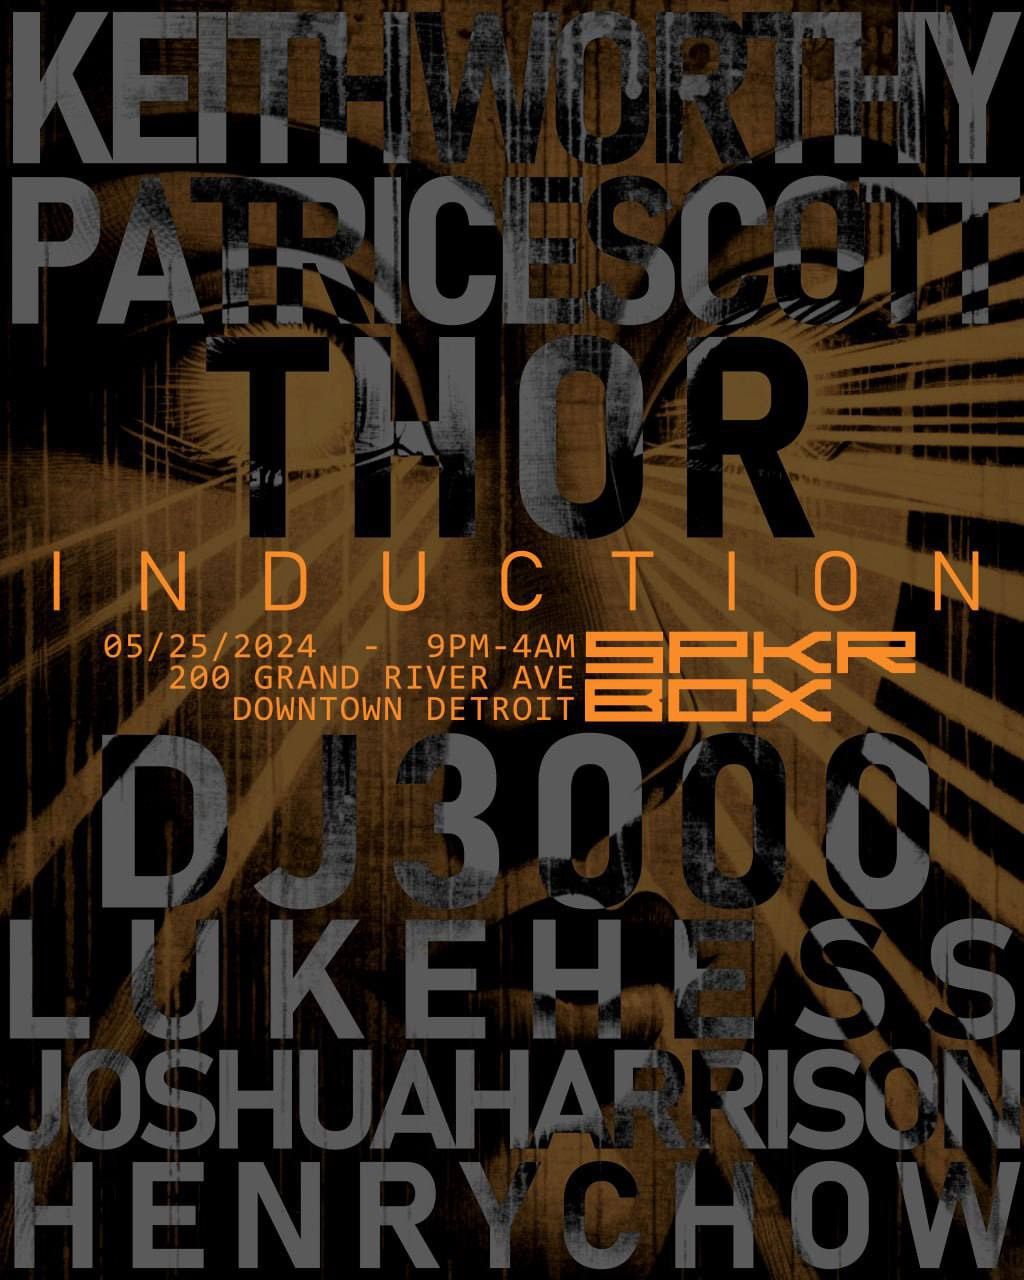 INDUCTION - Keith Worthy, Patrice Scott, Thor, DJ 3000, Luke Hess, Joshua Harrison, Henry Chow